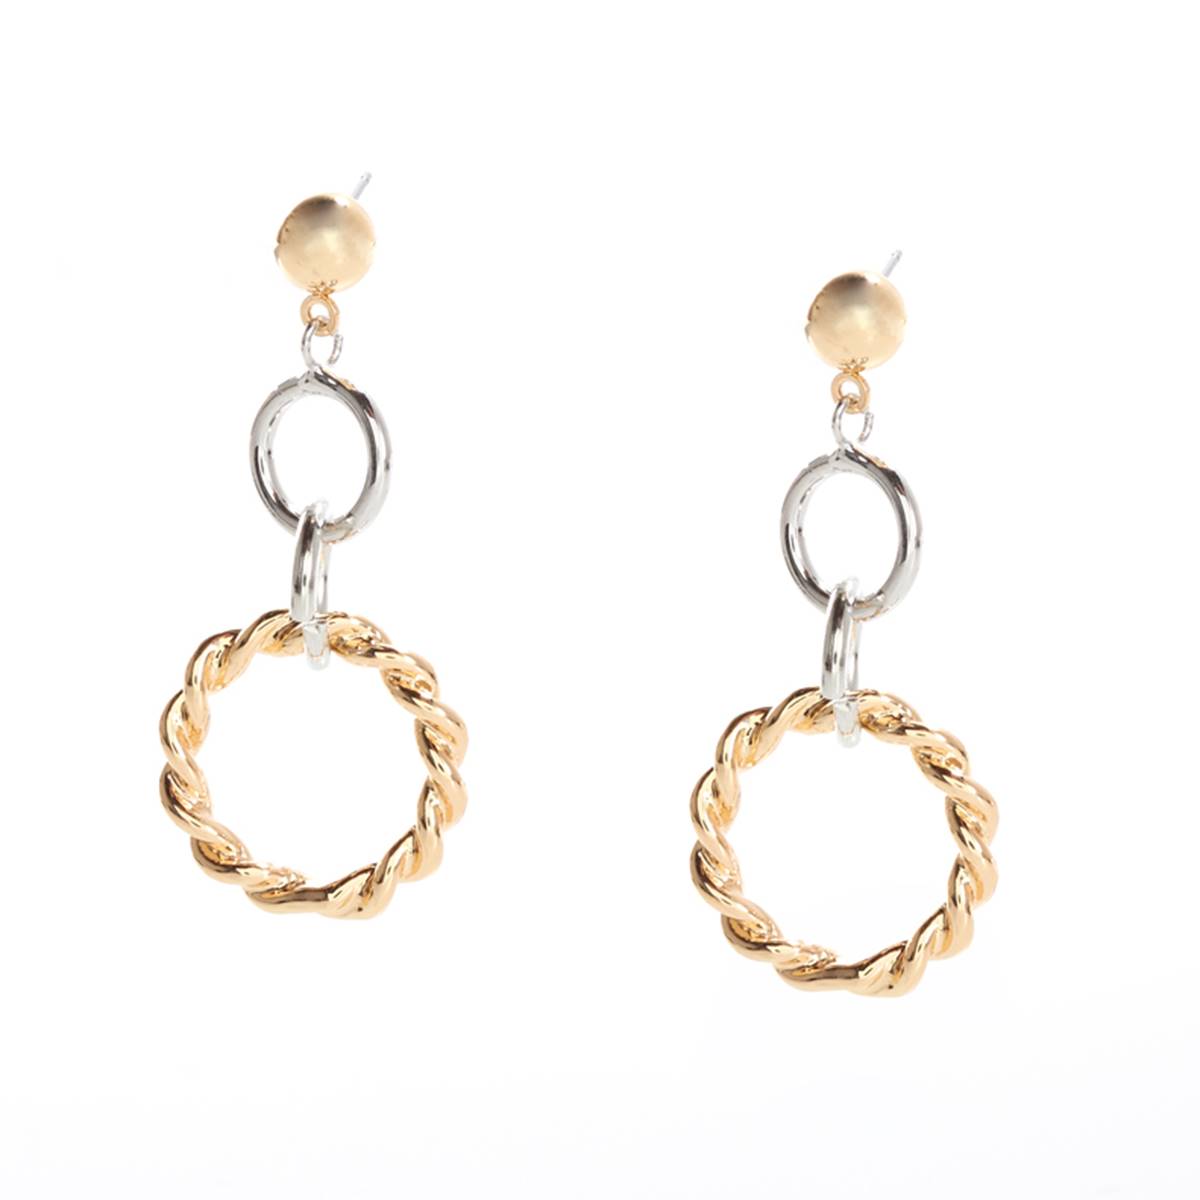 Ashley Cooper(tm) Gold & Silver-Tone Circle Link Drop Earrings